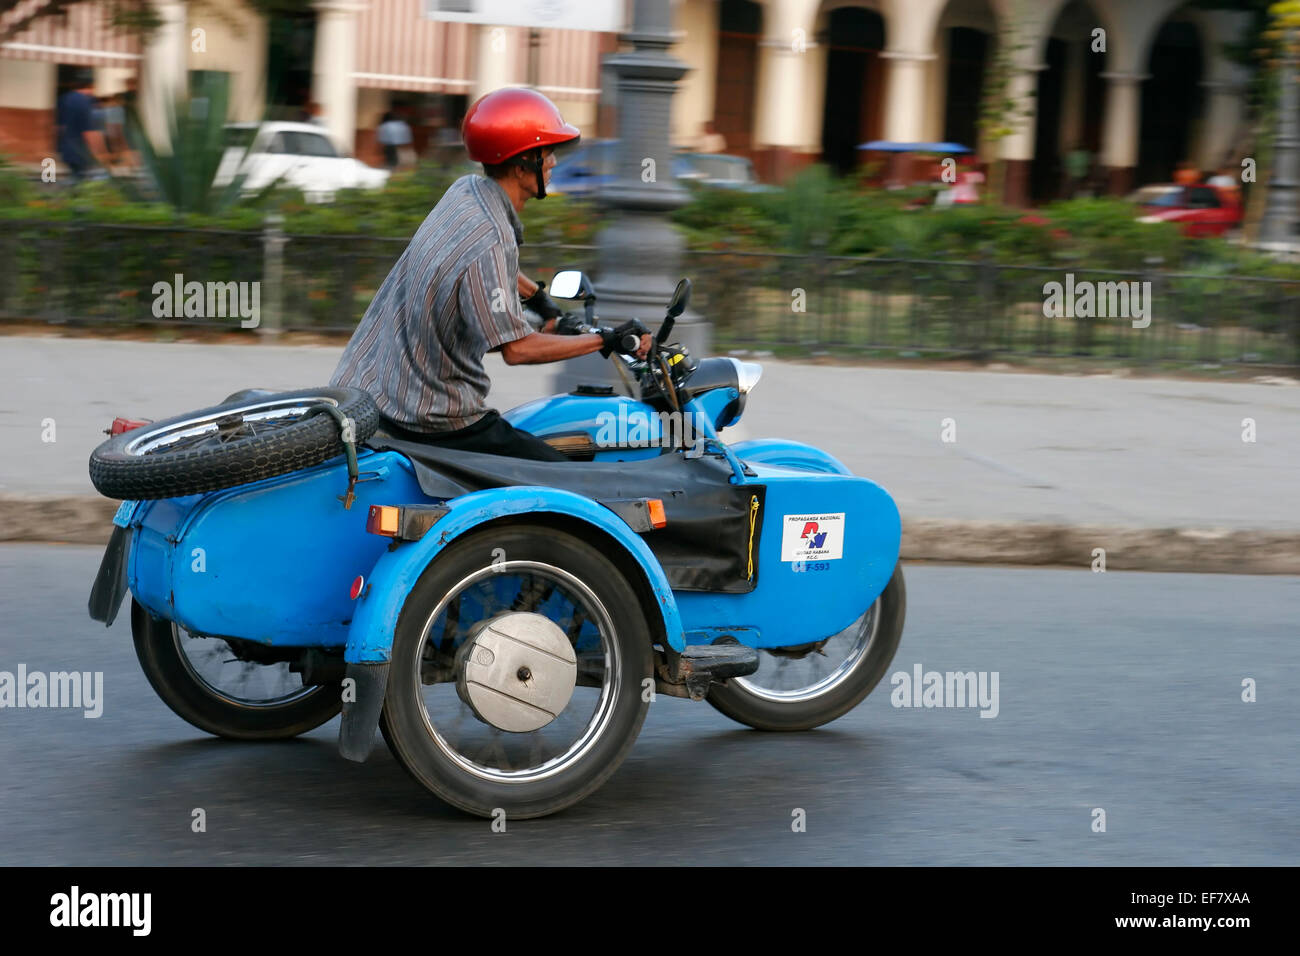 Cuban man riding vintage motorbike with sidecar, Havana, Cuba Stock Photo